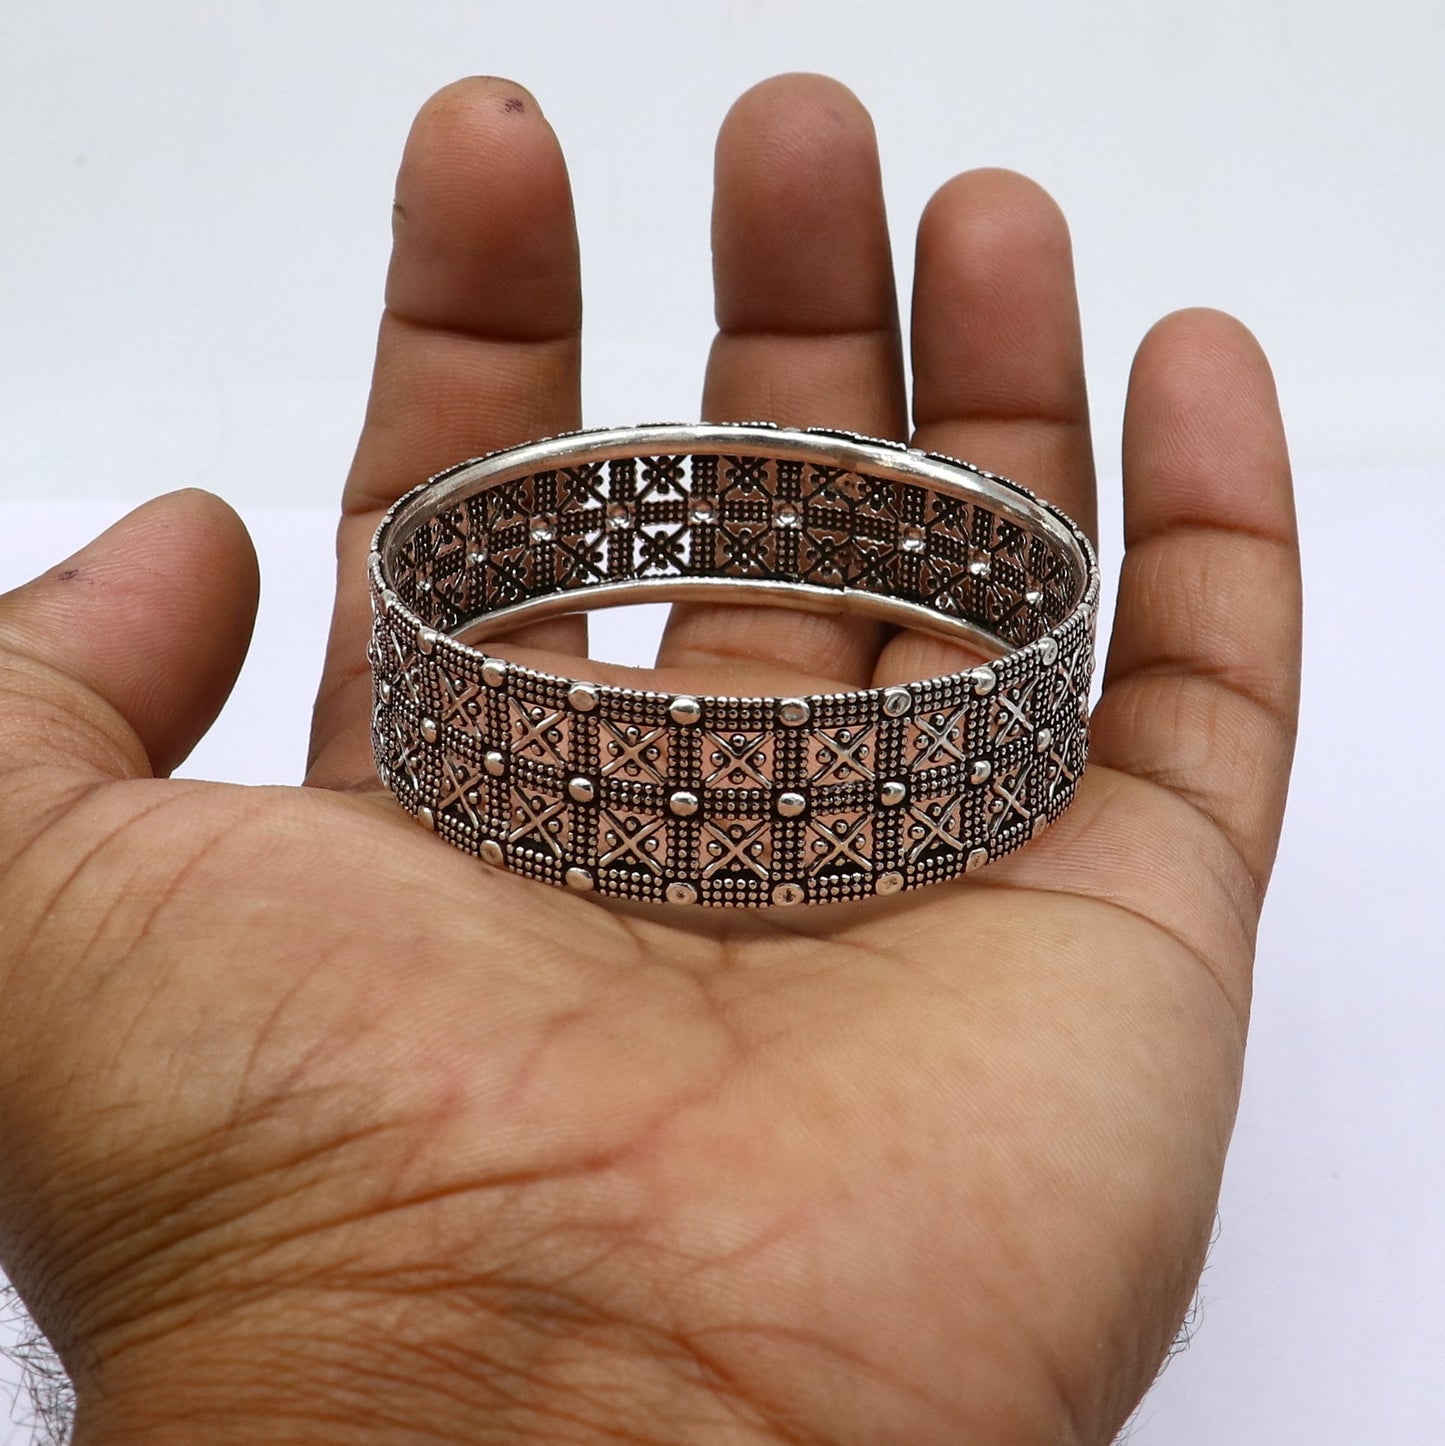 Exclusive 925 sterling silver amazing customized bangle bracelet kada , best brides gifting ethnic stylish tribal fashion jewelry nba397 - TRIBAL ORNAMENTS